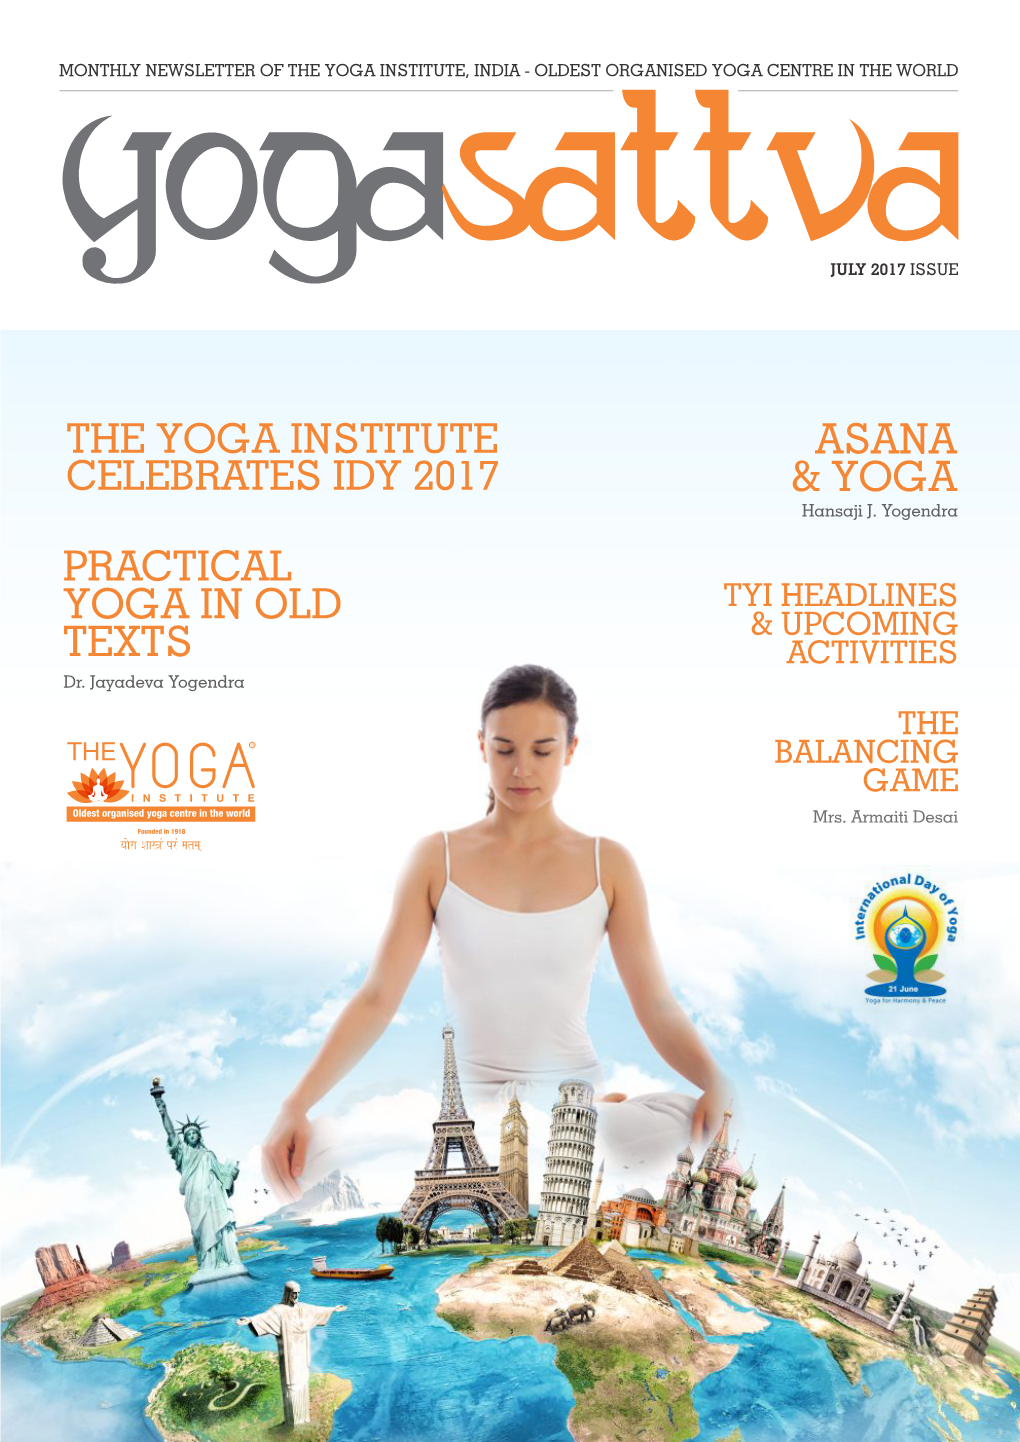 Asana & Yoga the Yoga Institute Celebrates Idy 2017 Practical Yoga in Old Texts